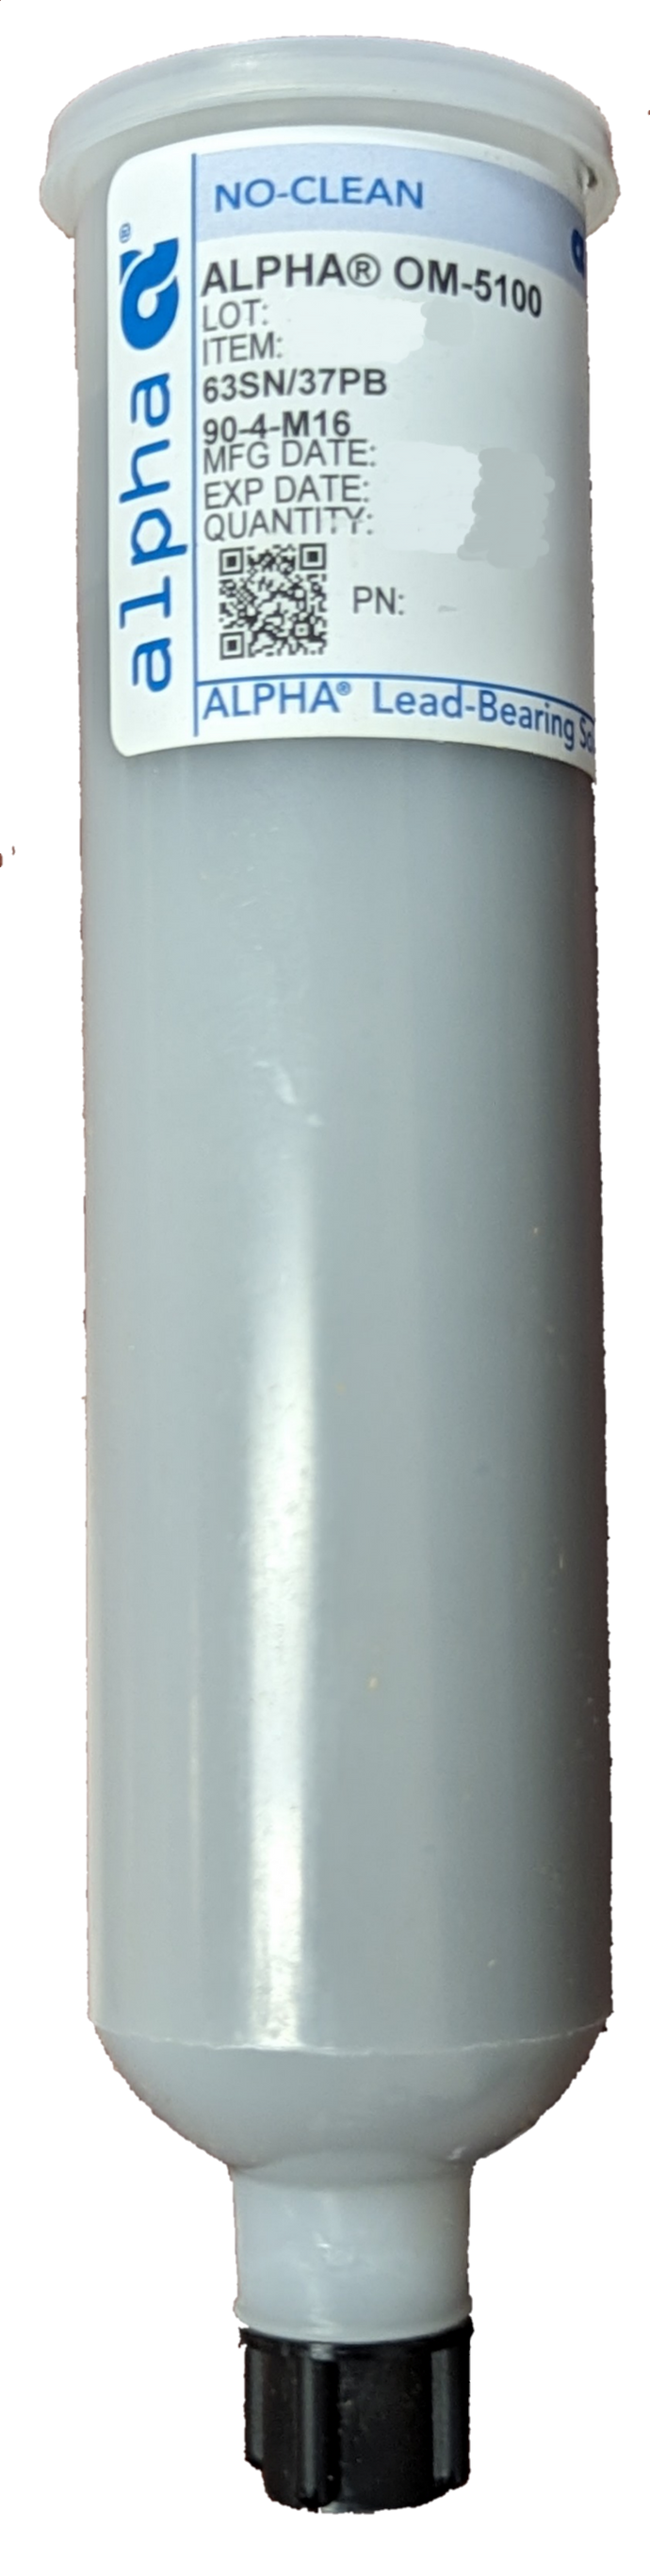 OM-5100 Solder Paste, SAC305, T4, No-Clean (700g Cartridge)